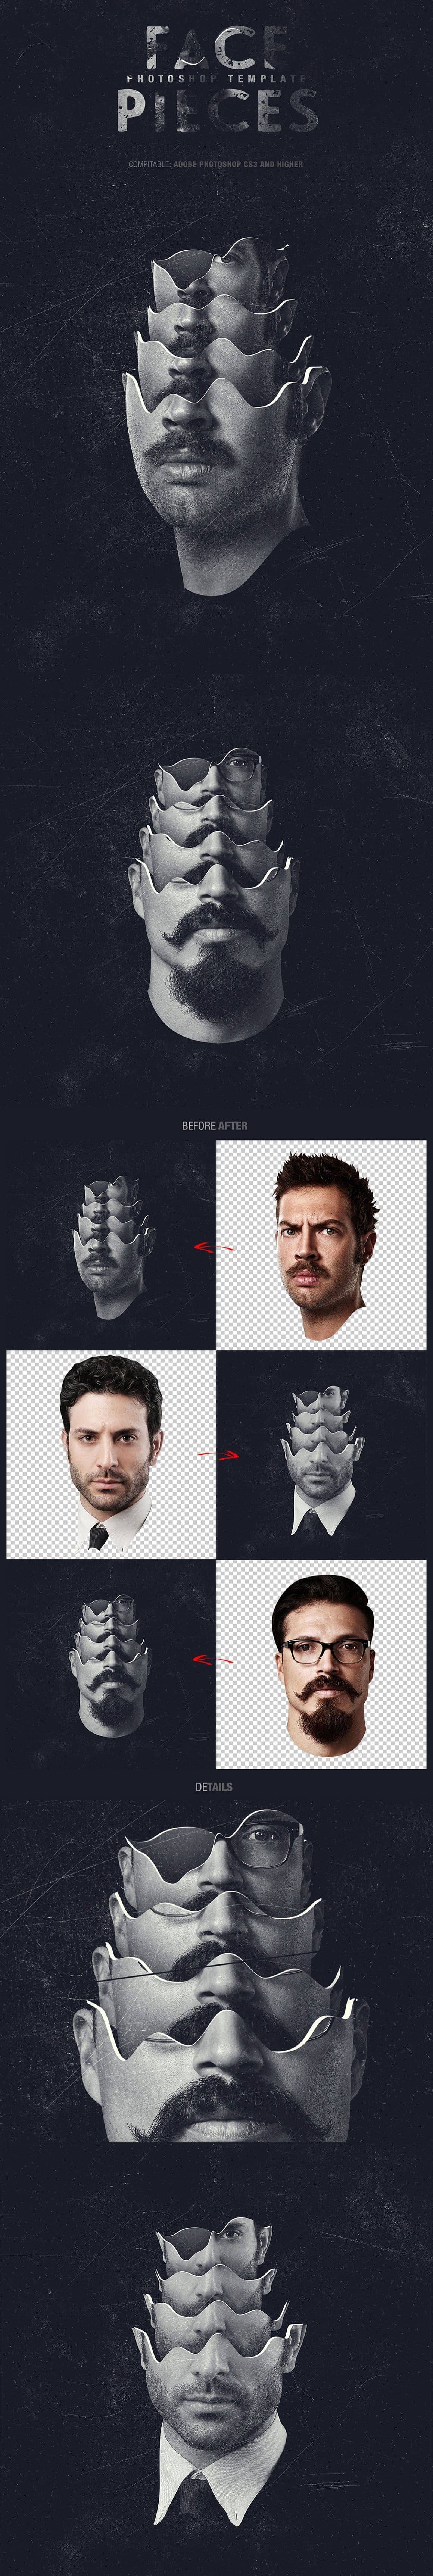 Face pieces photoshop template design by amorjesu.